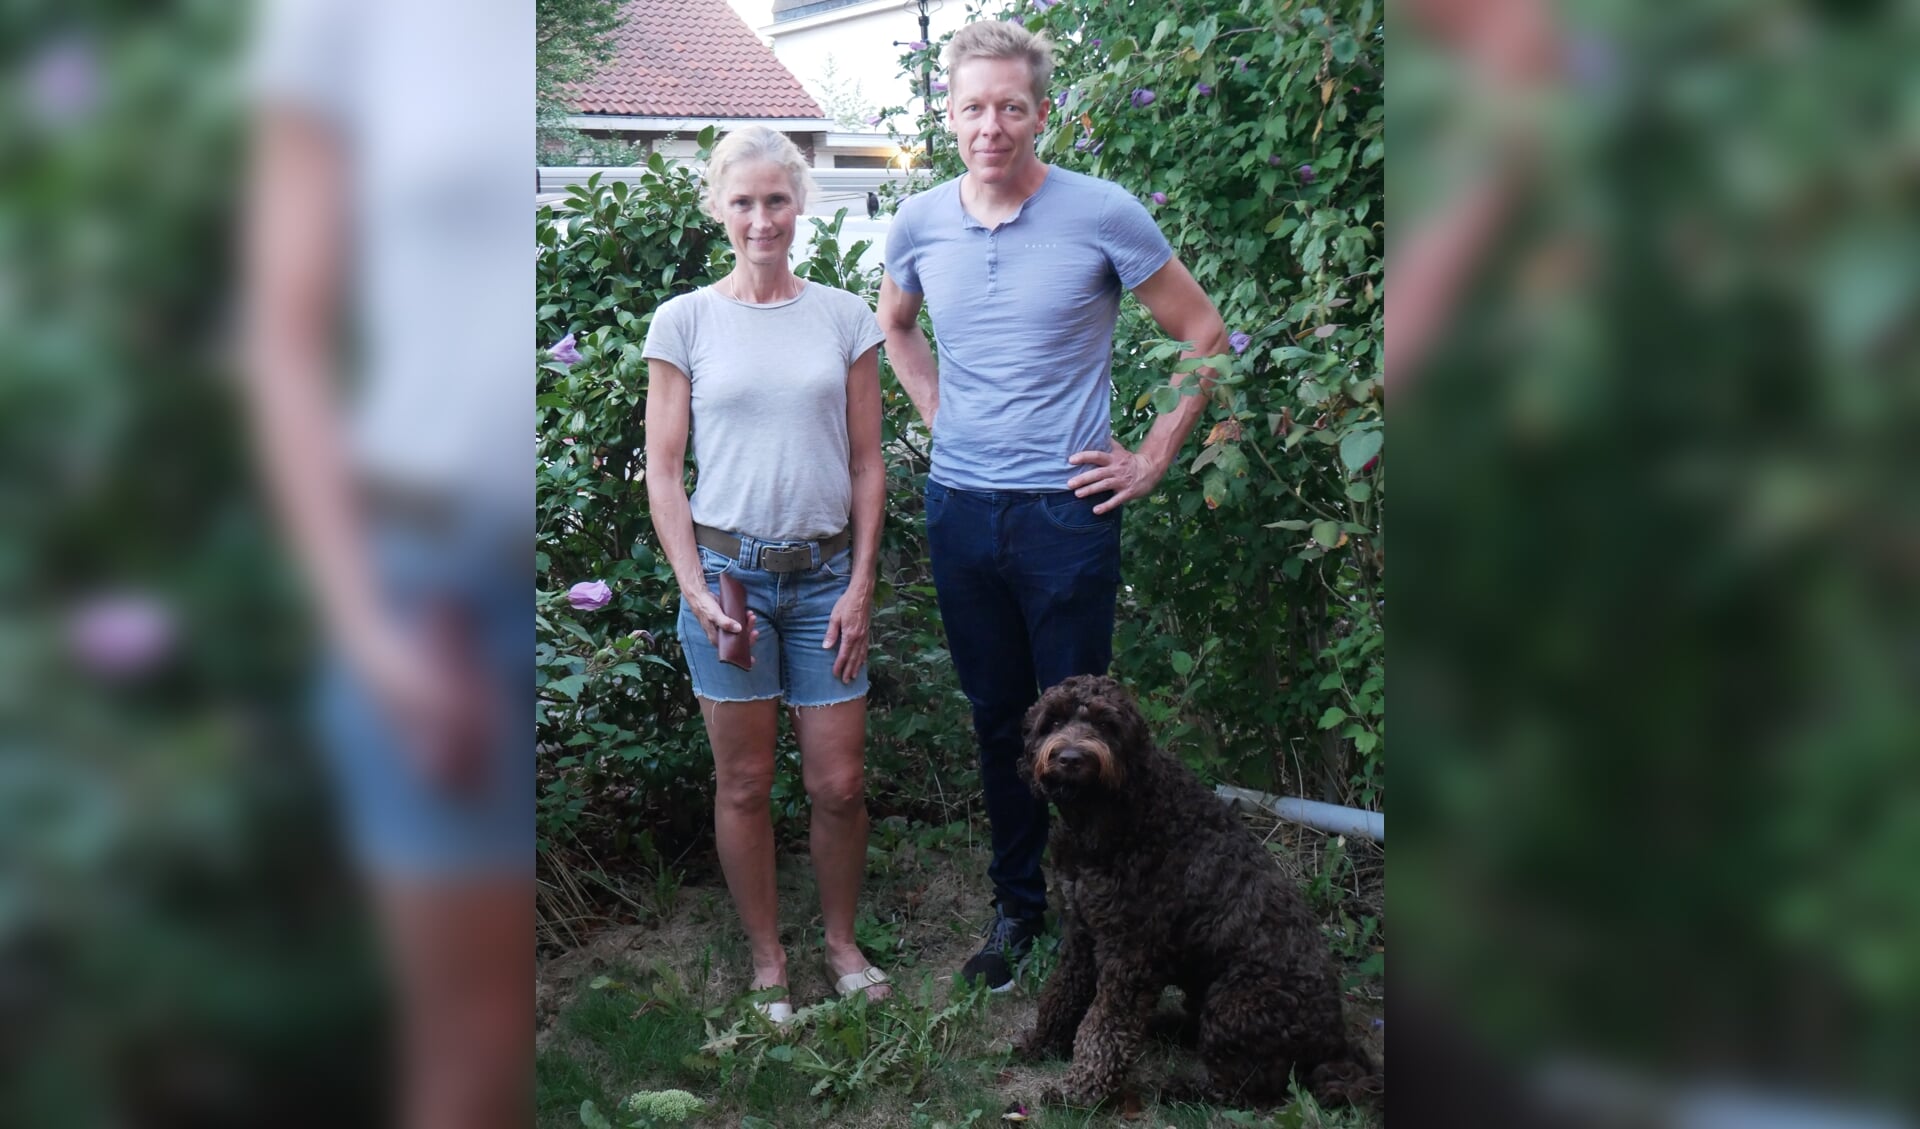 Ria Zonneveld (interim manager, getrouwd, twee dochters) en Erik Wissema (loopbaanadviseur, getrouwd, twee volwassen zoons) wonen in Leeuwendaal. Vóór hen zit Eriks hond Youp.